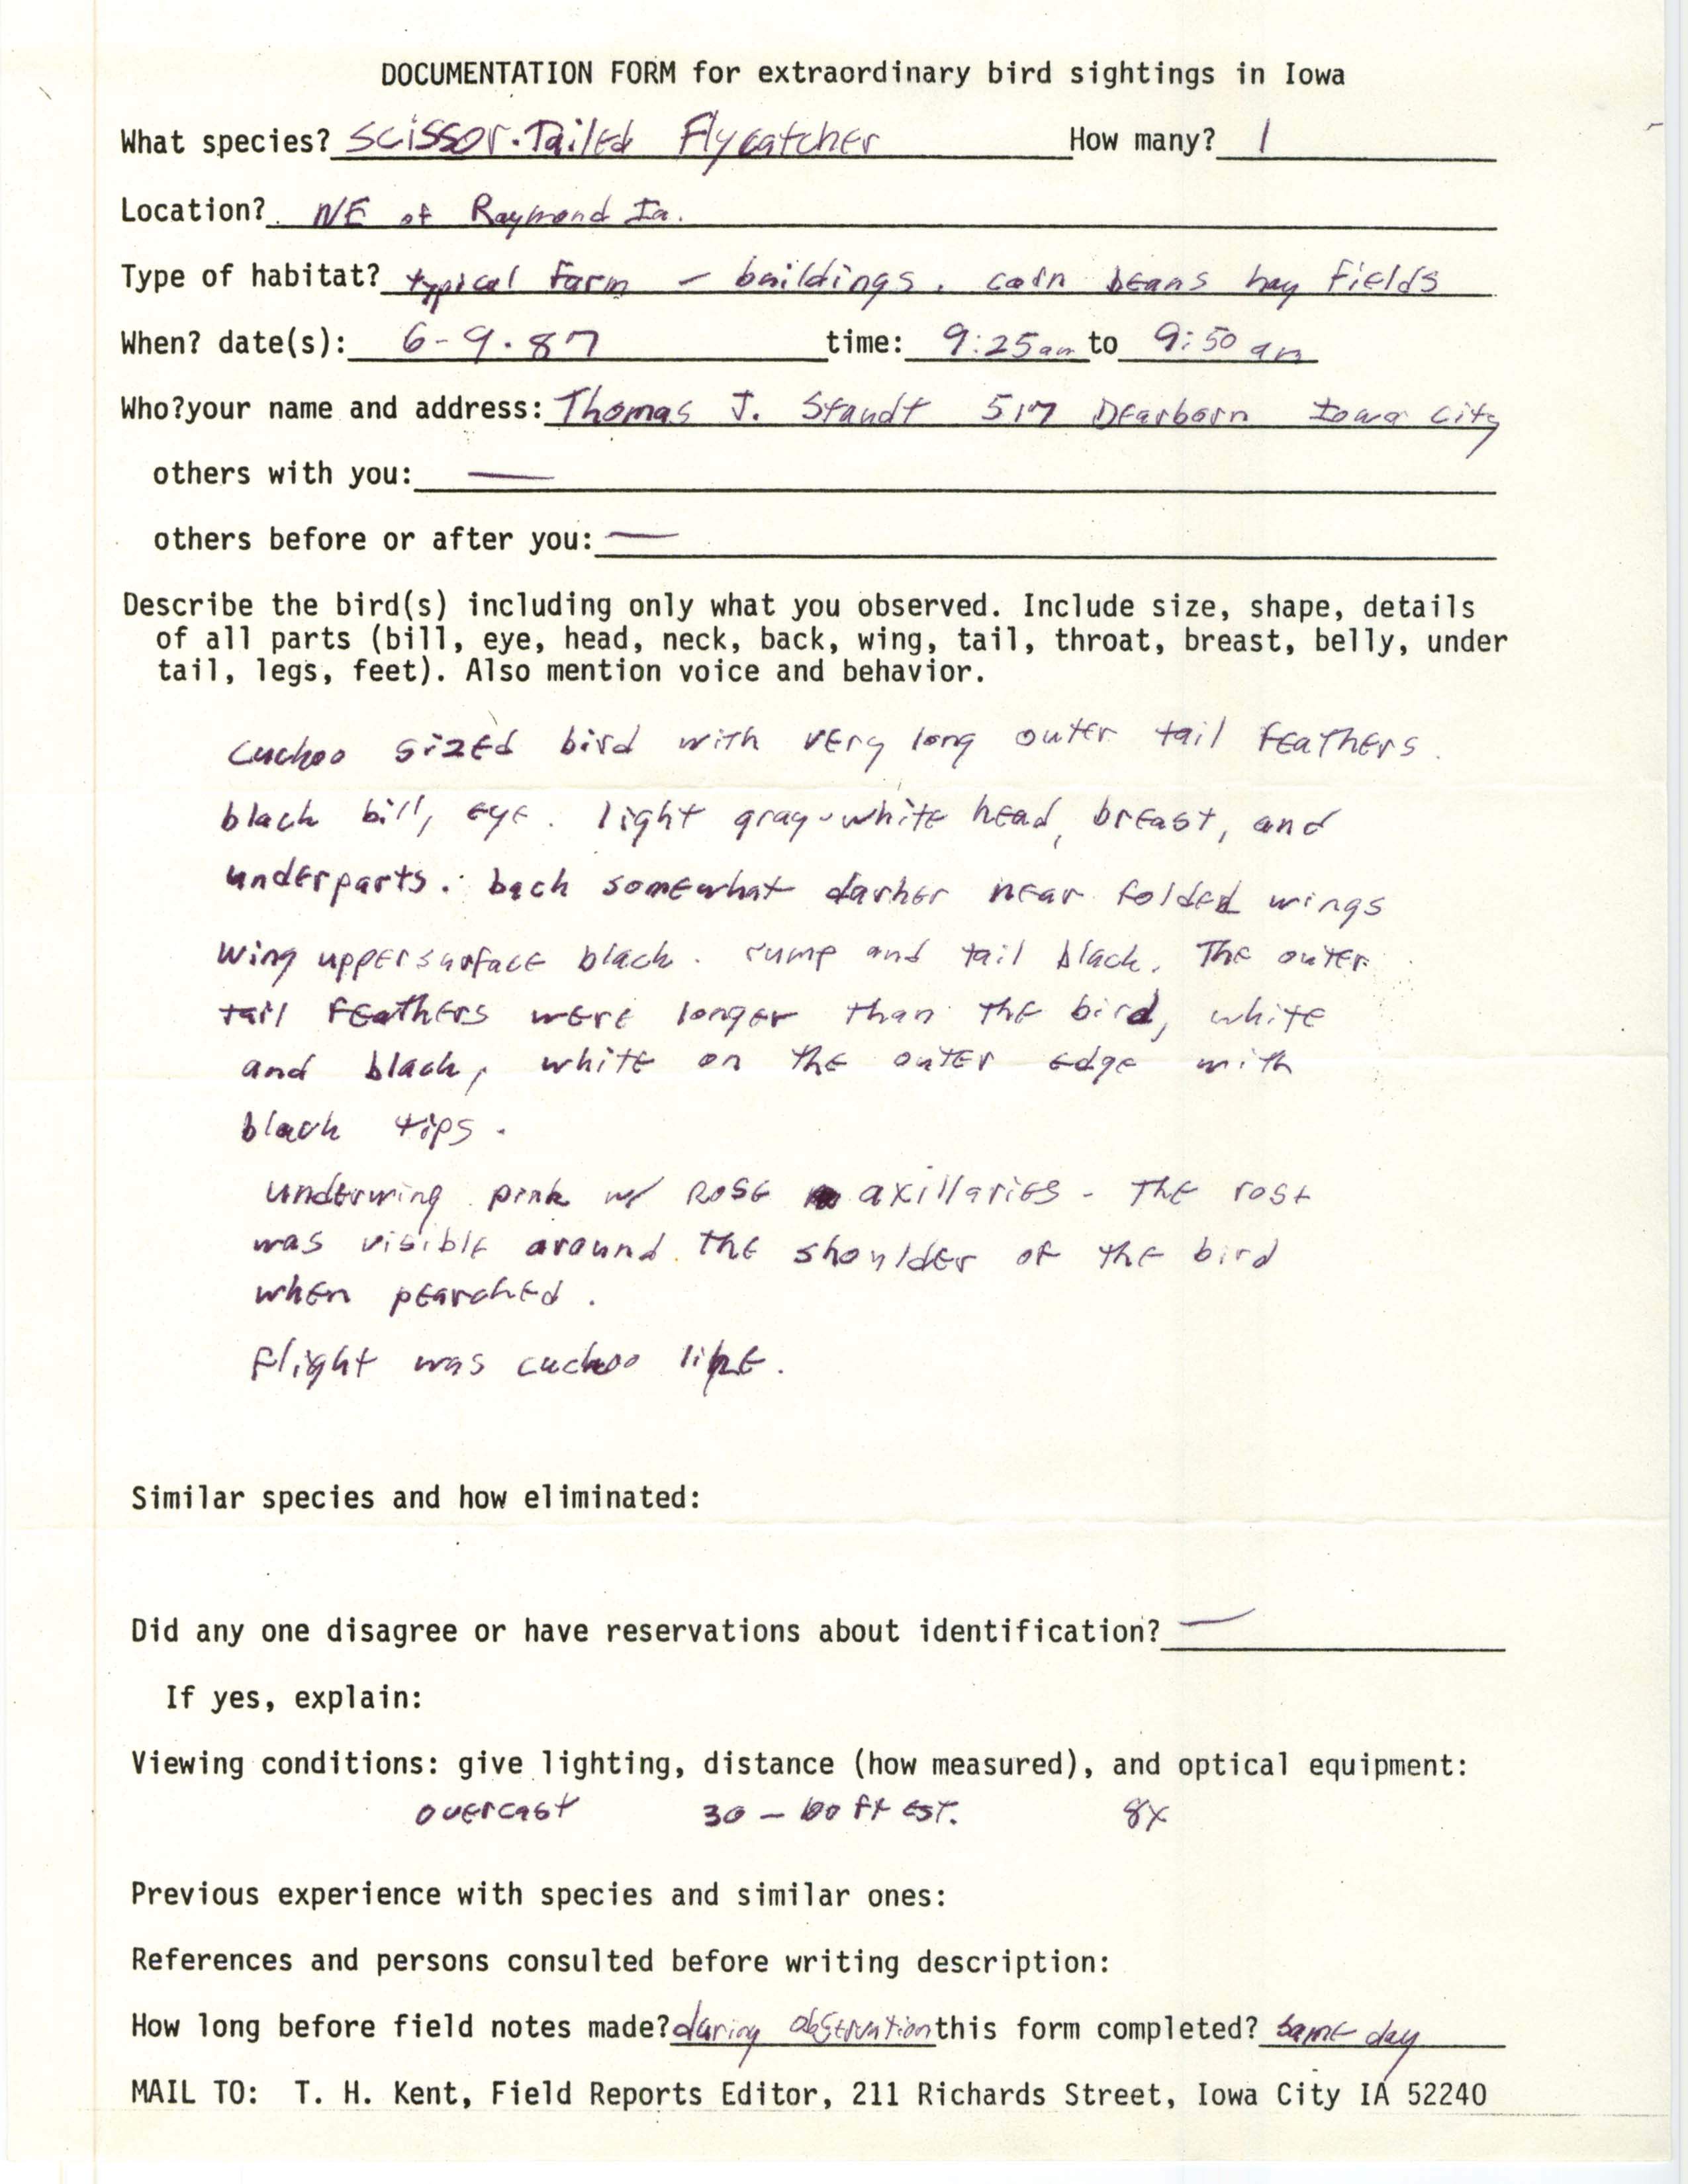 Rare bird documentation form for Scissor-tailed Flycatcher northeast of Raymond in 1987